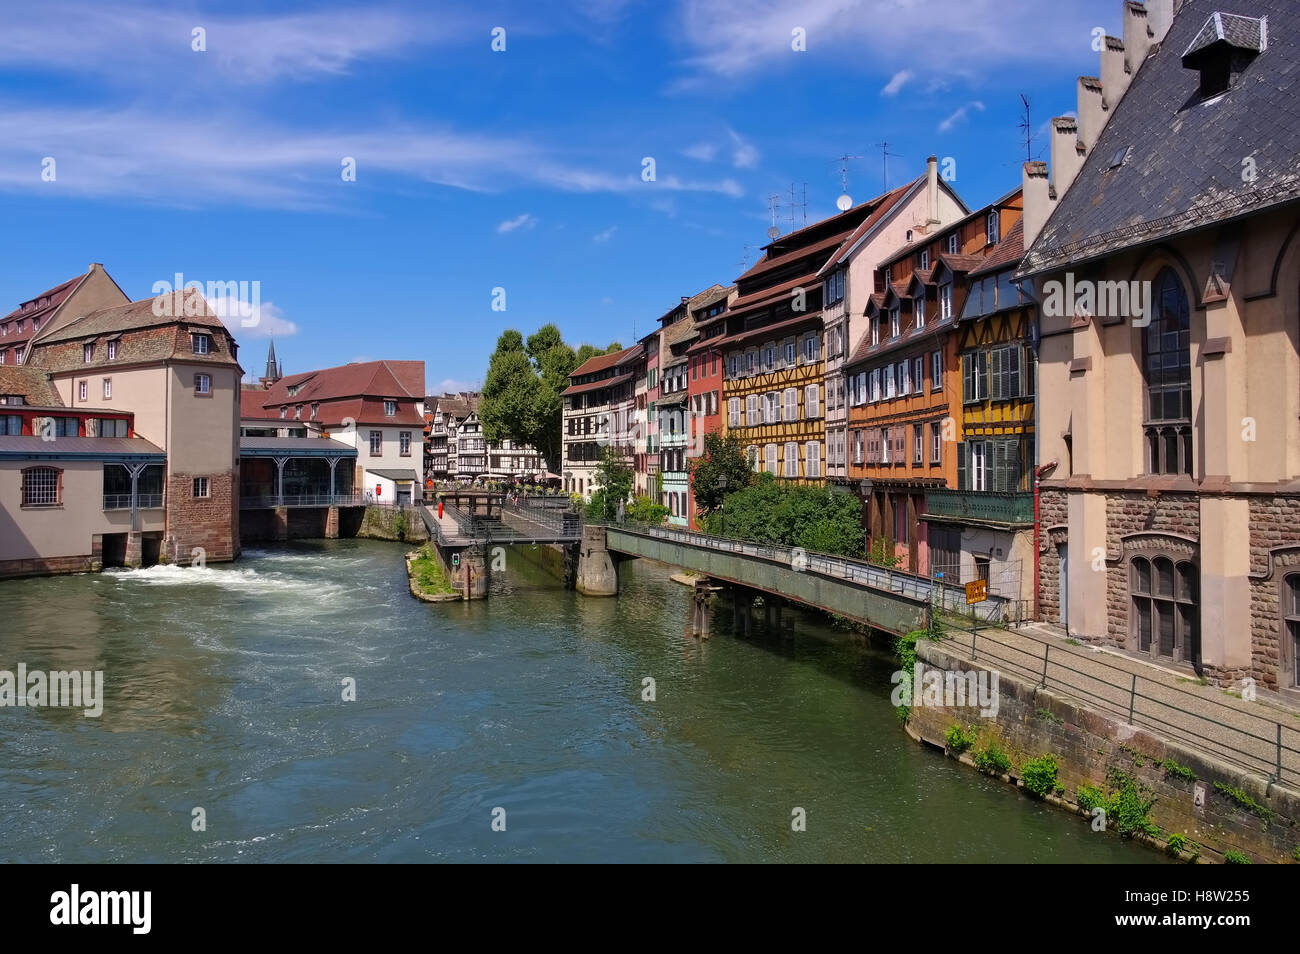 Strassburg Petite France im Elsass, Frankreich - Strasbourg Petite France in  Alsace, France Stock Photo